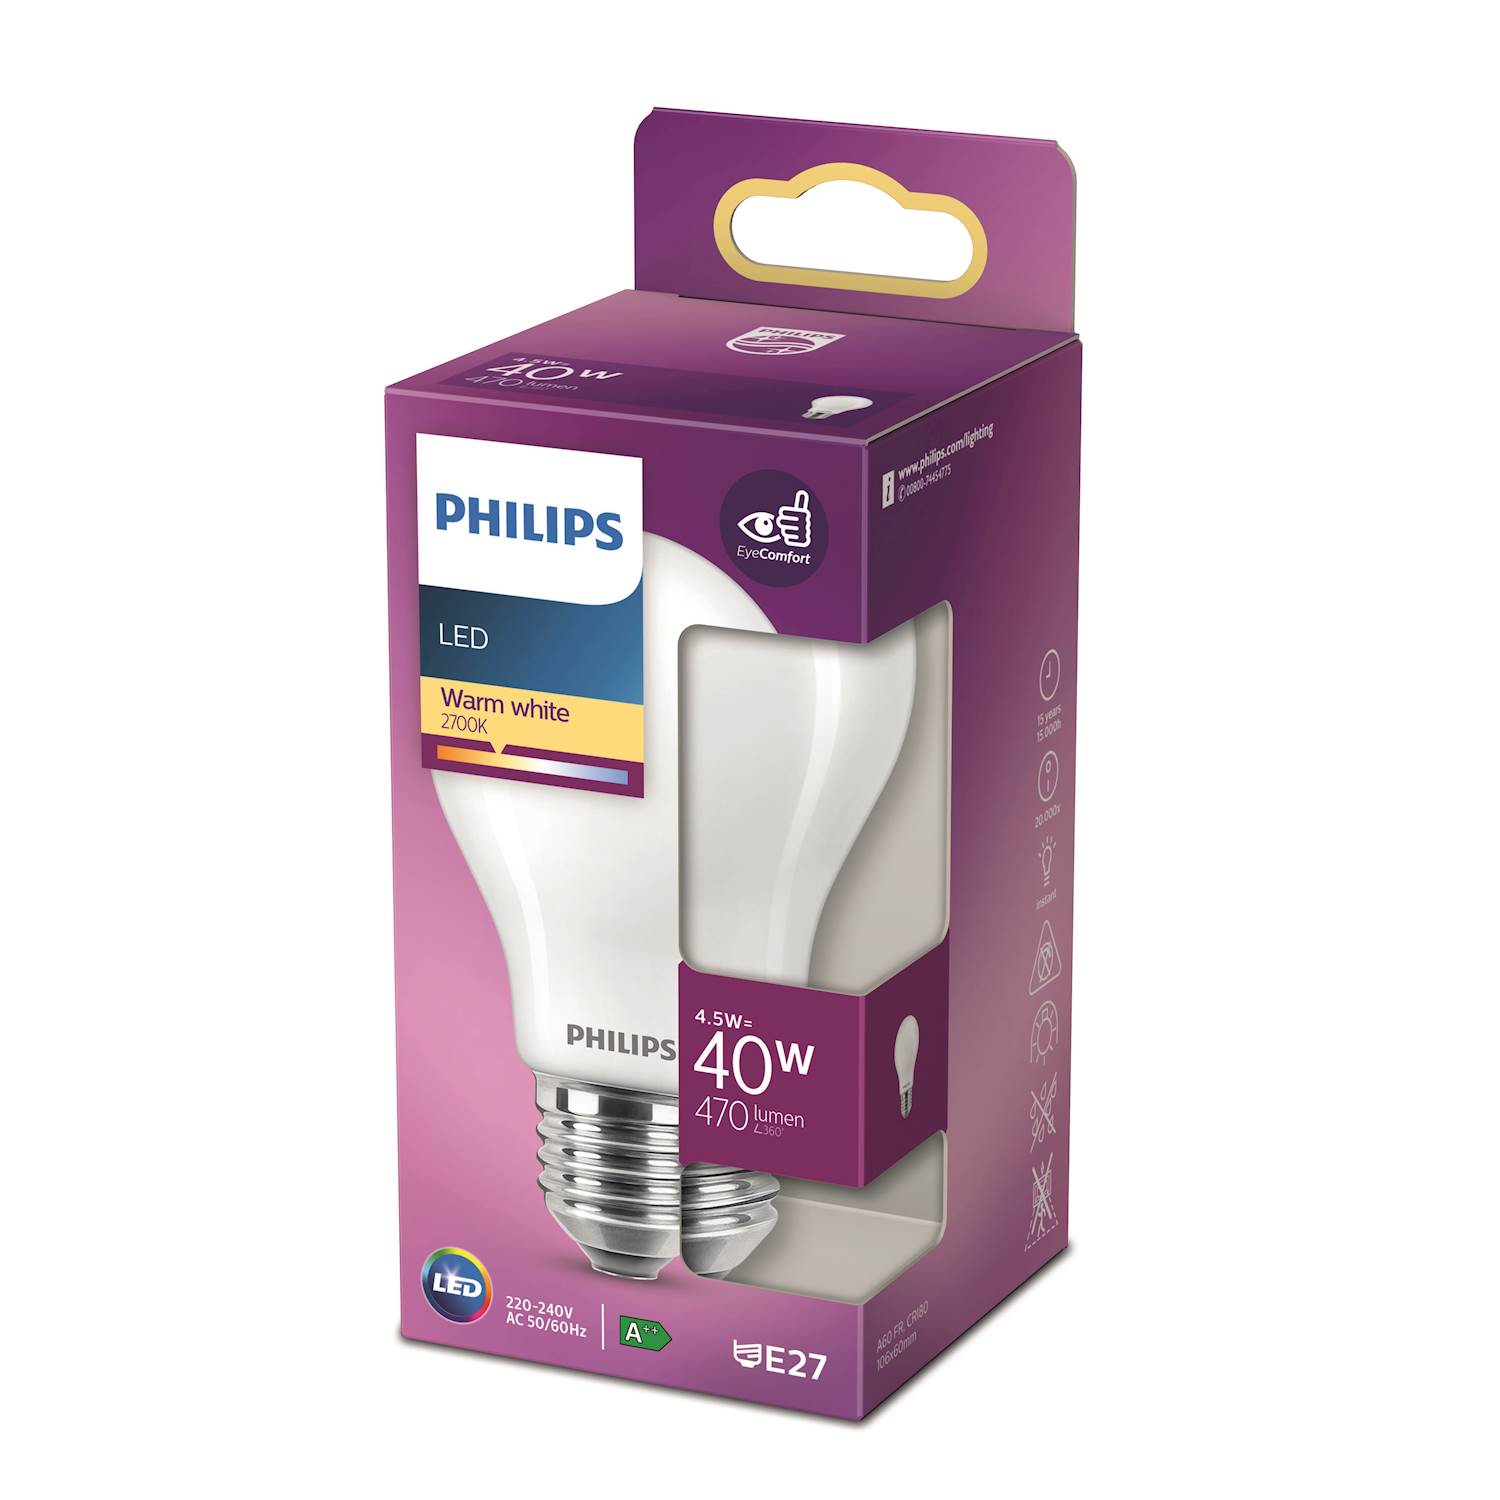 Läs mer om Philips LED Classic 40w norm e27 nd